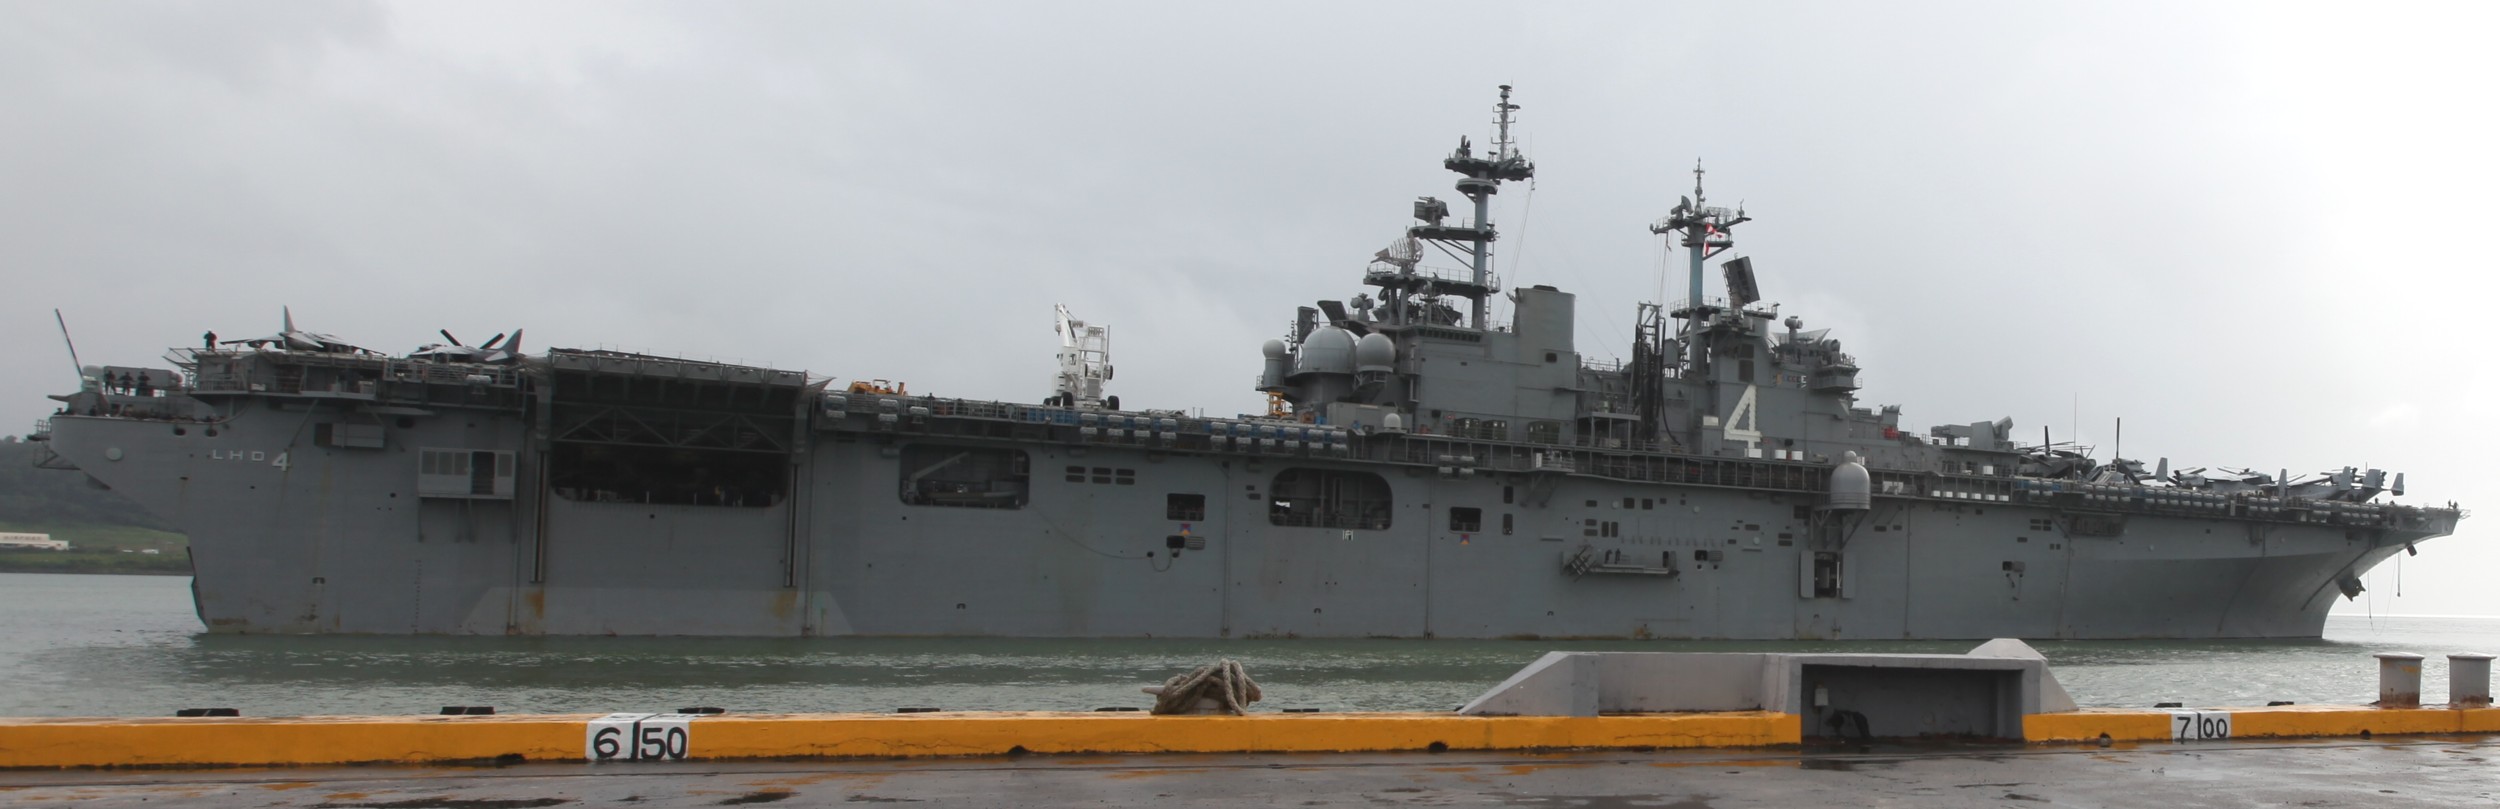 lhd-4 uss boxer wasp class amphibious assault ship dock landing us navy marines vmm-166 subic bay philippines 85